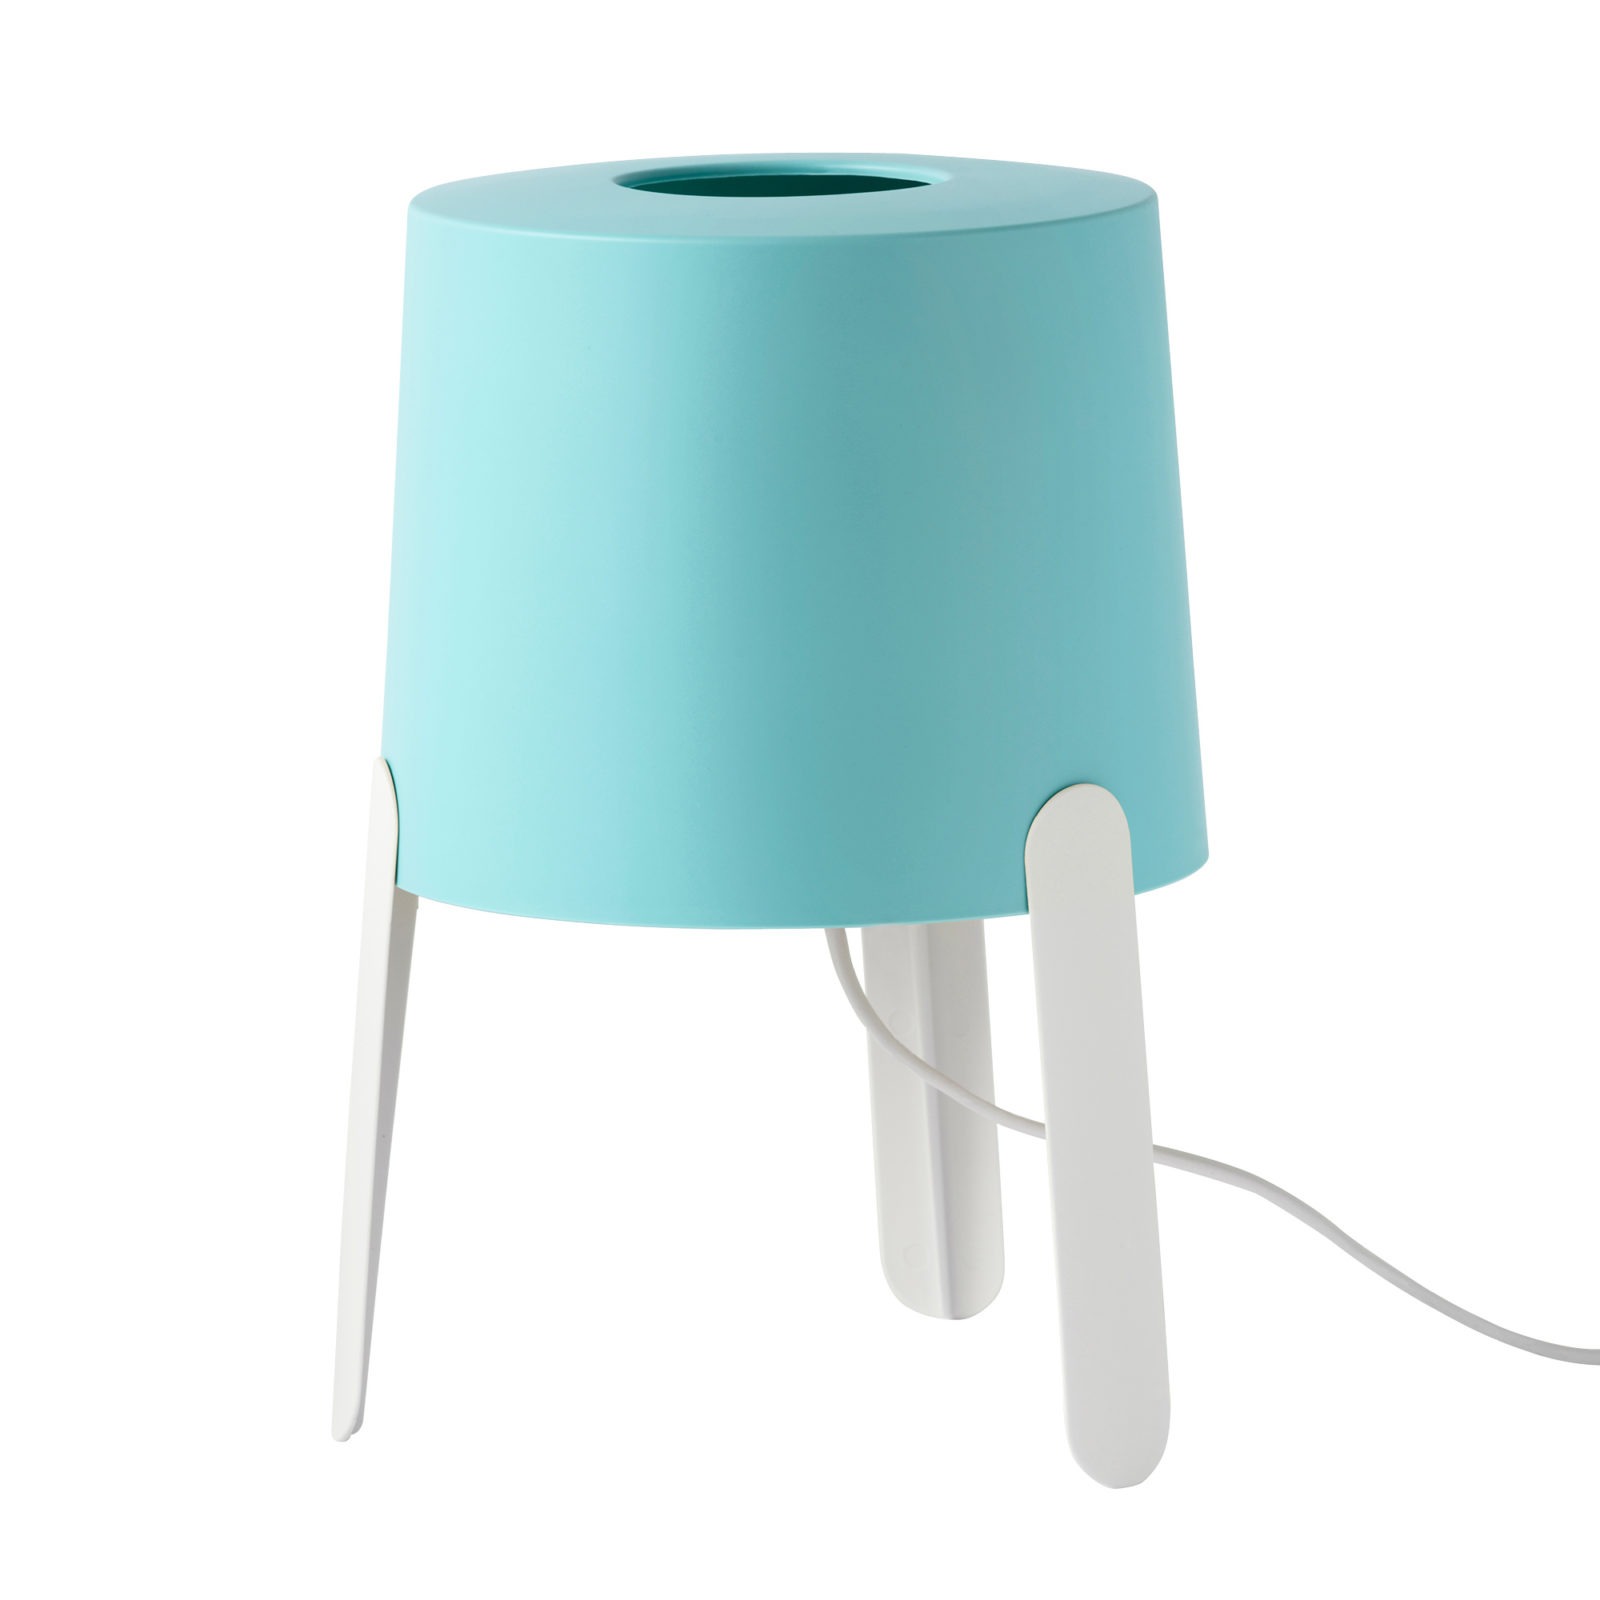 Three-legged table lamp with light blue shade.